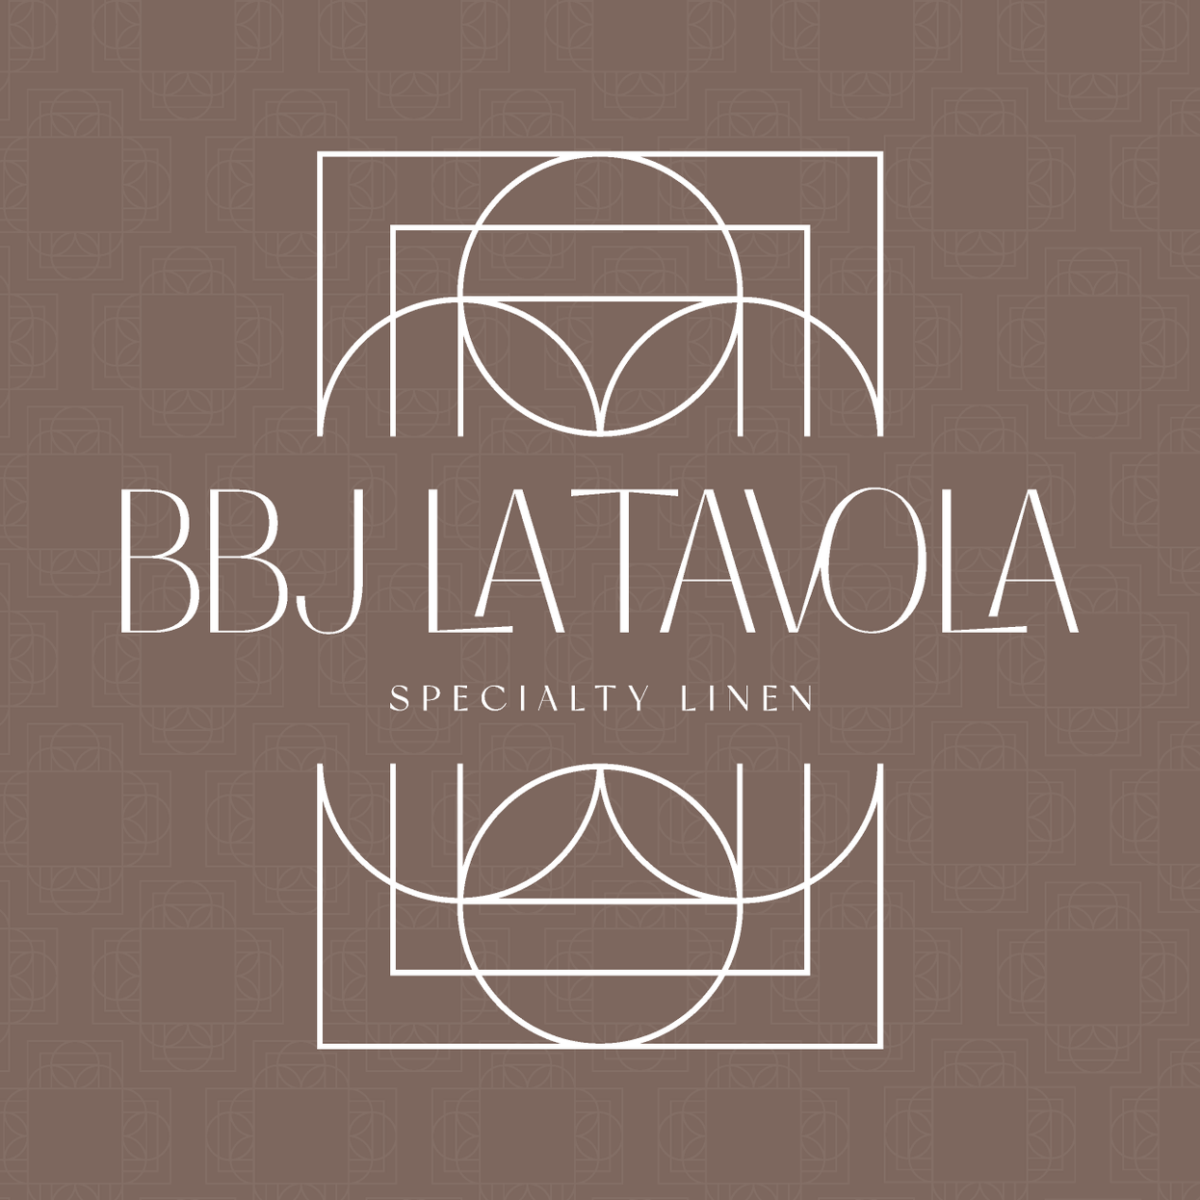 BBJ La Tavola Specialty Linens logo